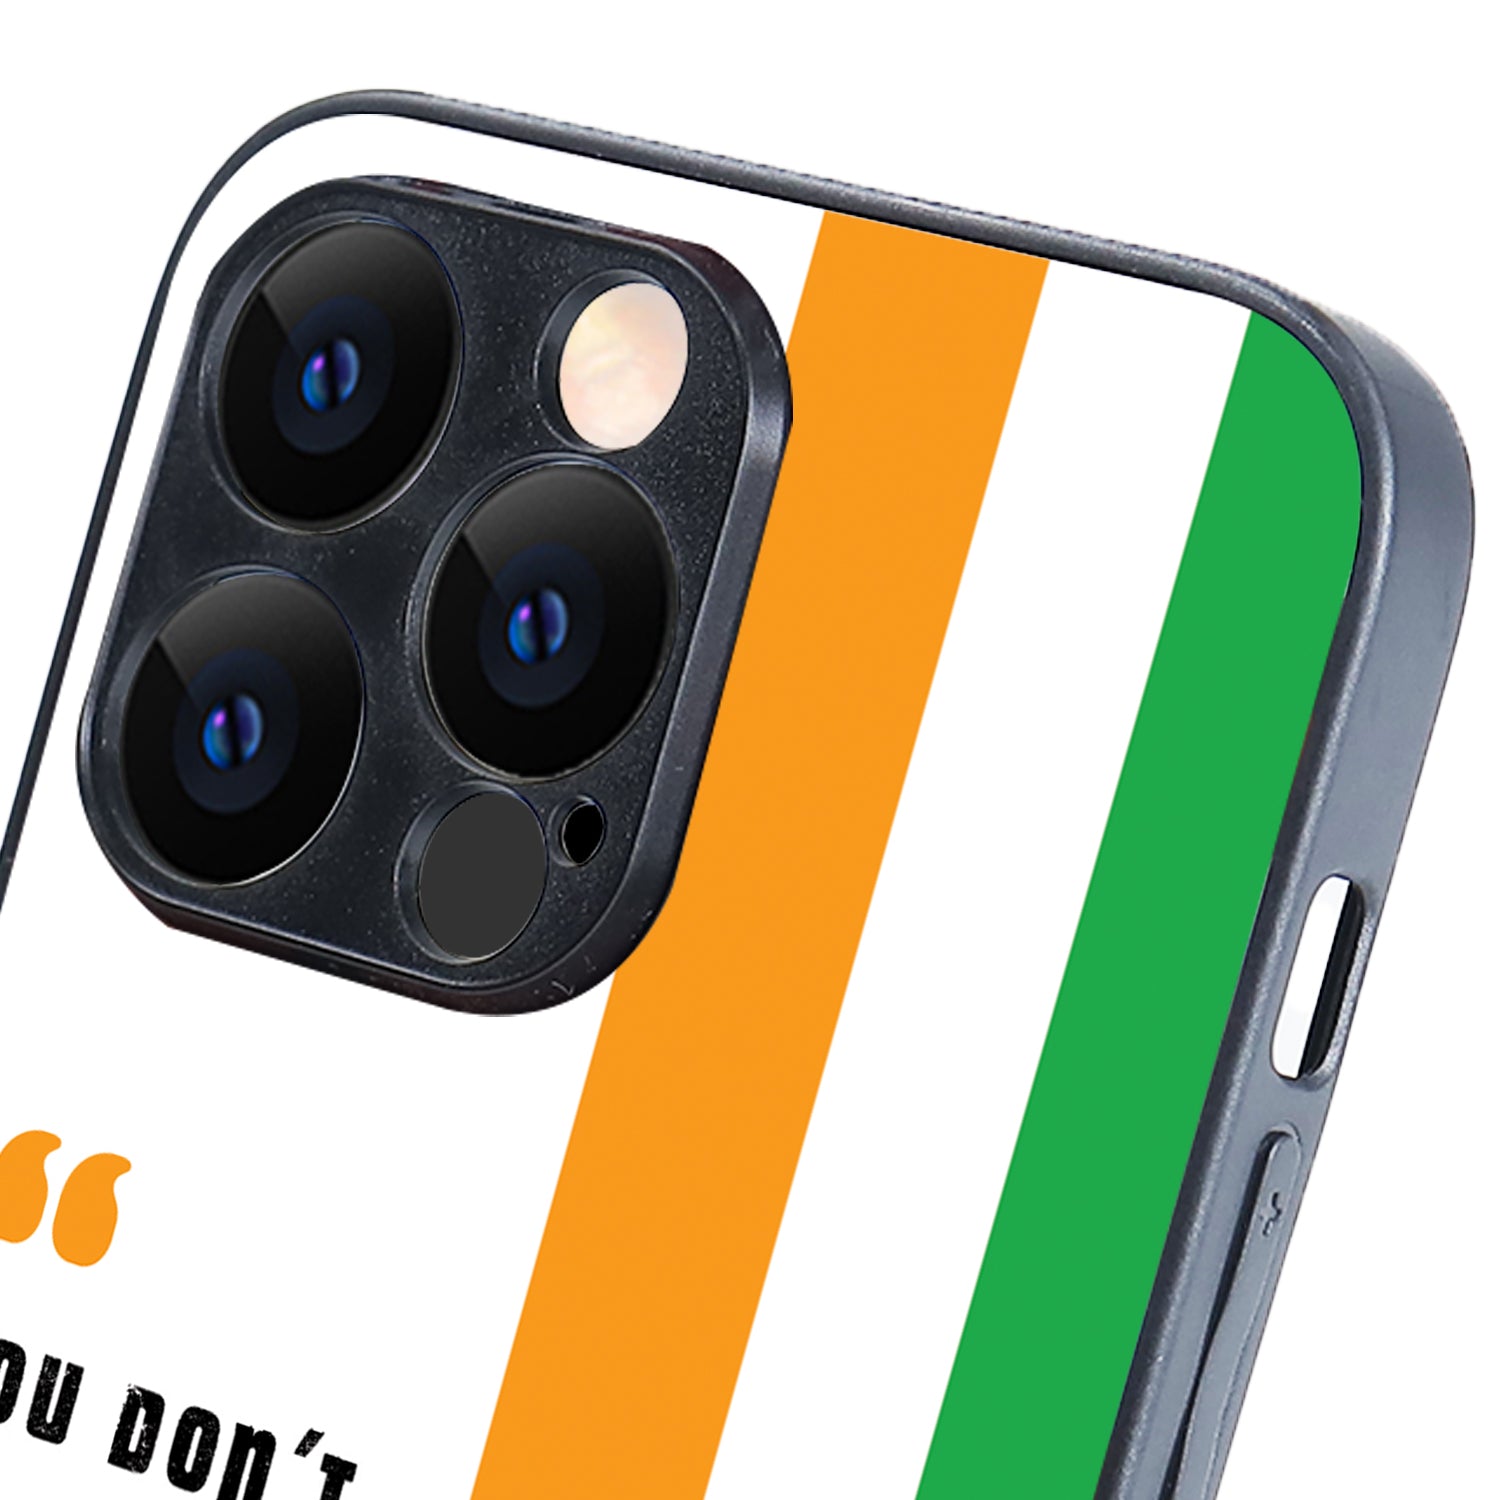 Dhoni Sports iPhone 14 Pro Max Case